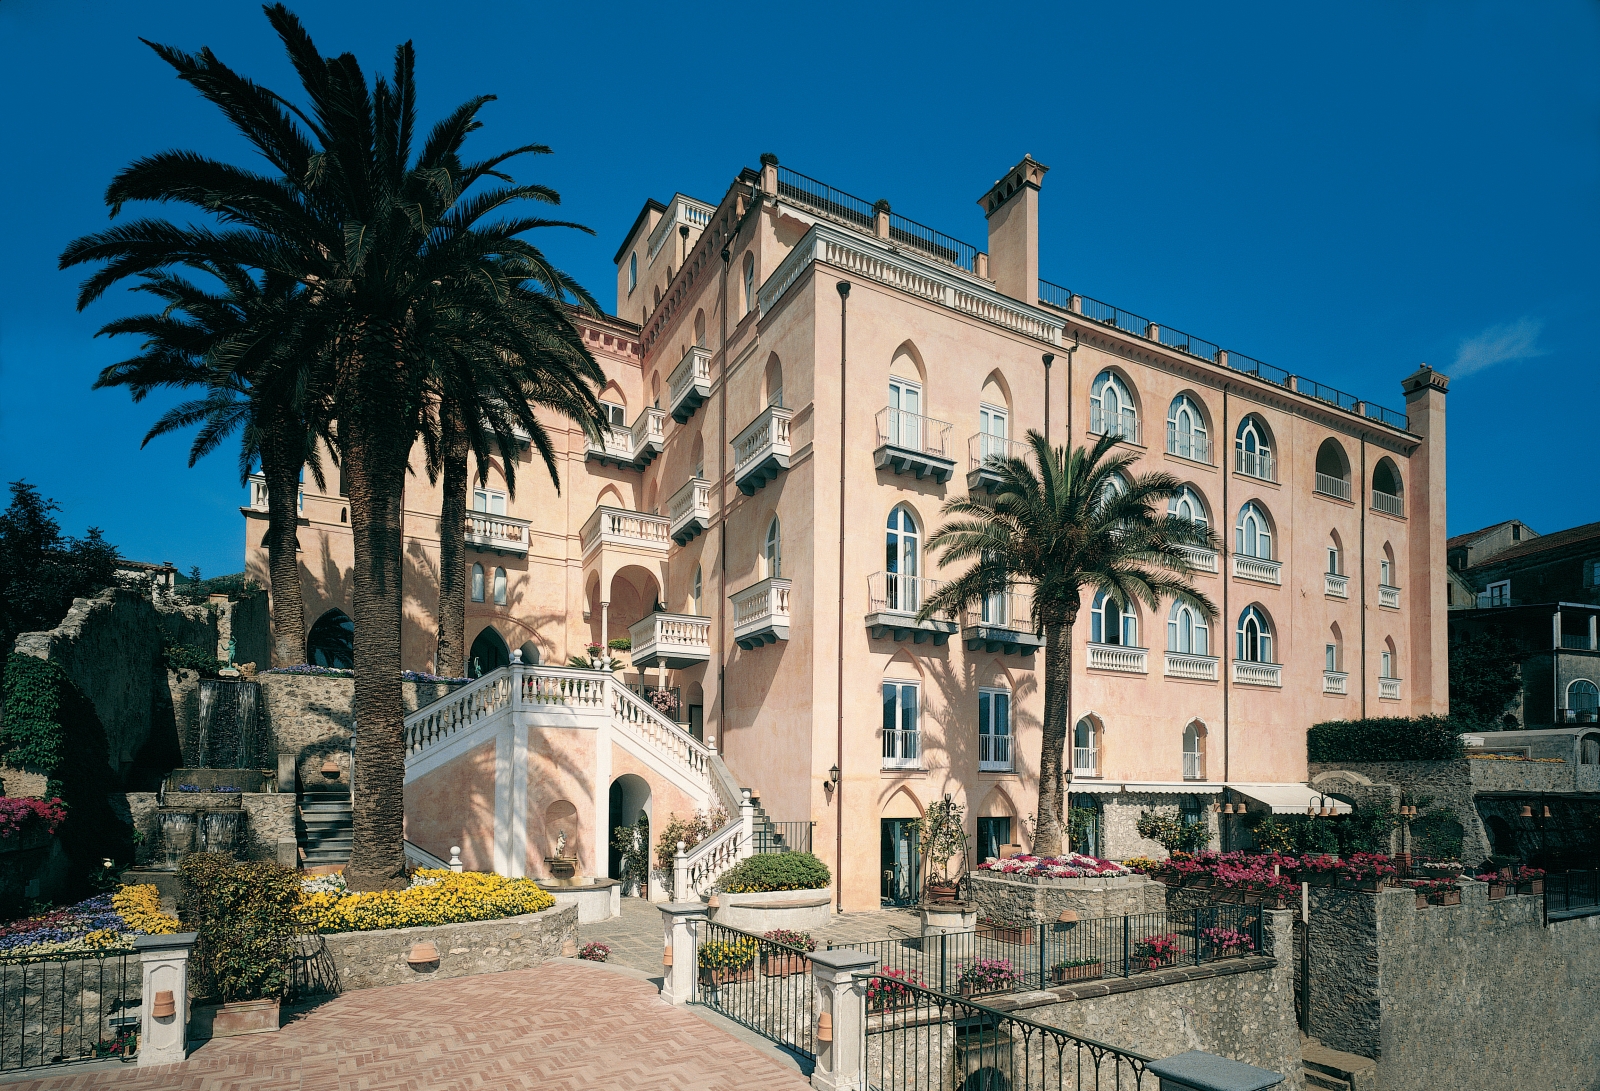 Exterior of Palazzo Avino with palms